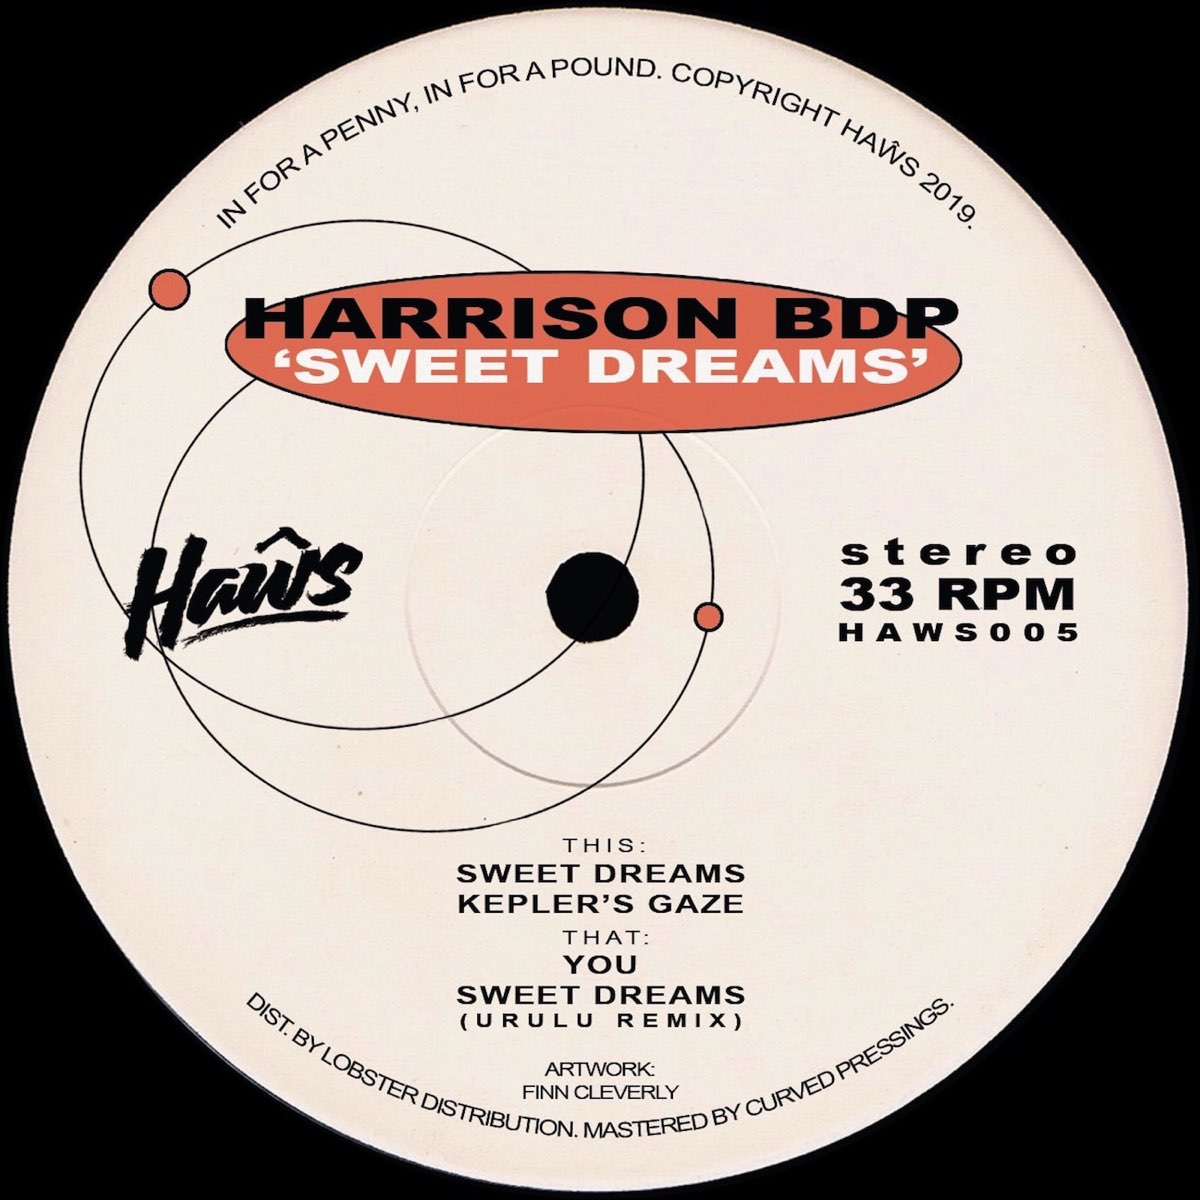 Harrison BDP. Dizzaster лейбл Dreams. Waajeed Memoirs of Hi-Tech Jazz. That is all караоке Harrison. This dreams песня